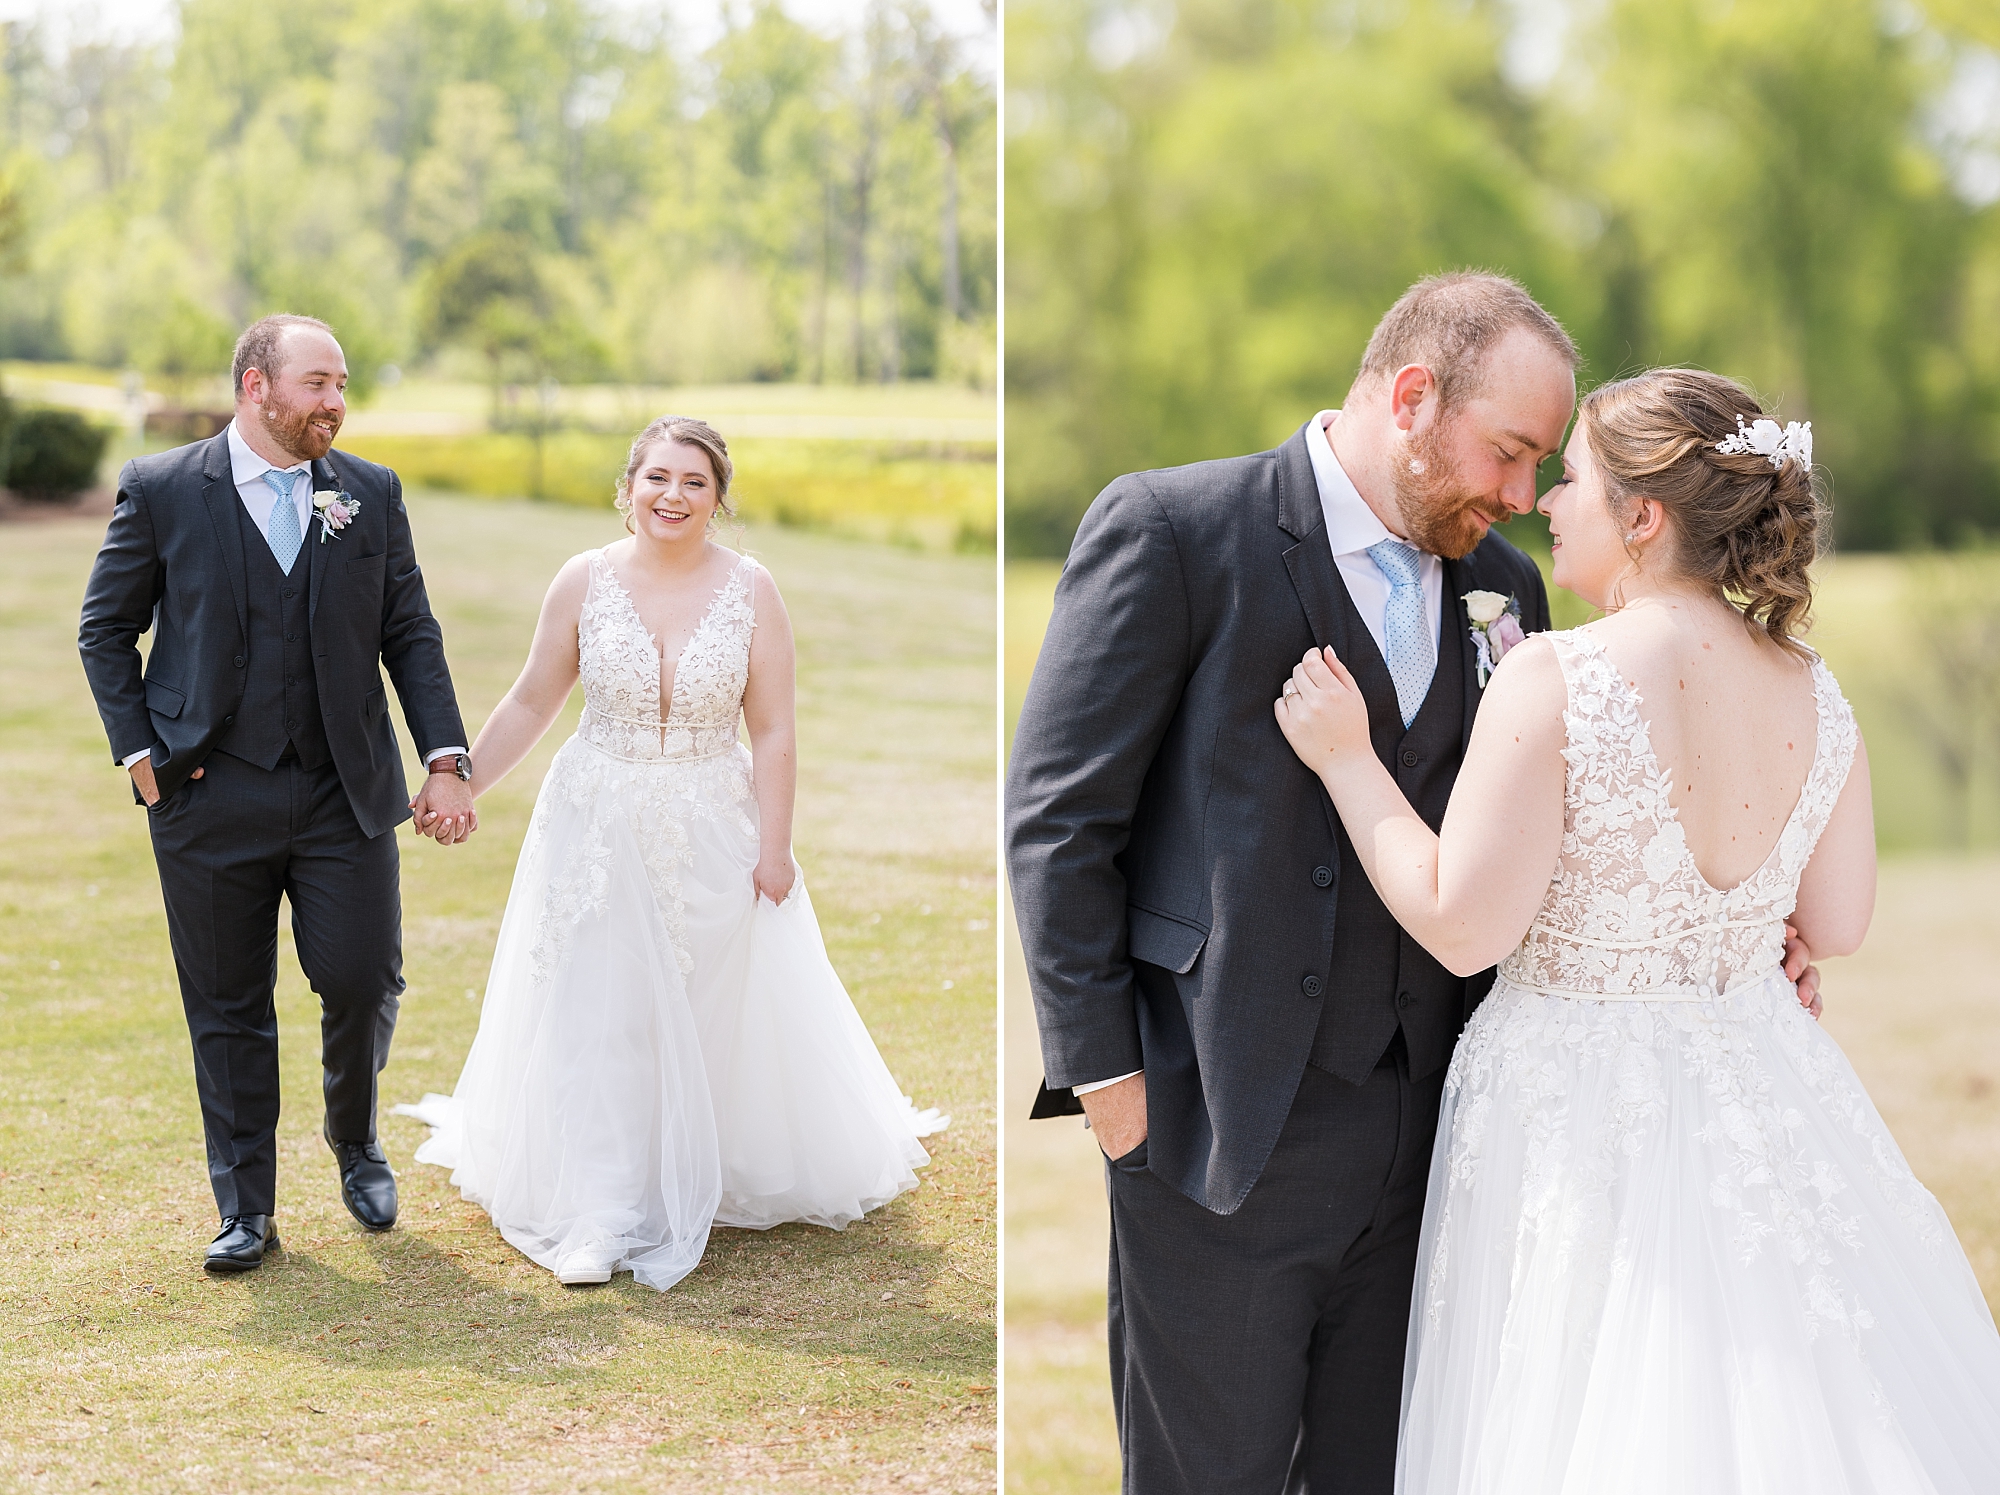  Bride and groom walking - Raleigh NC Wedding Photographer - Sarah Hinckley Photography